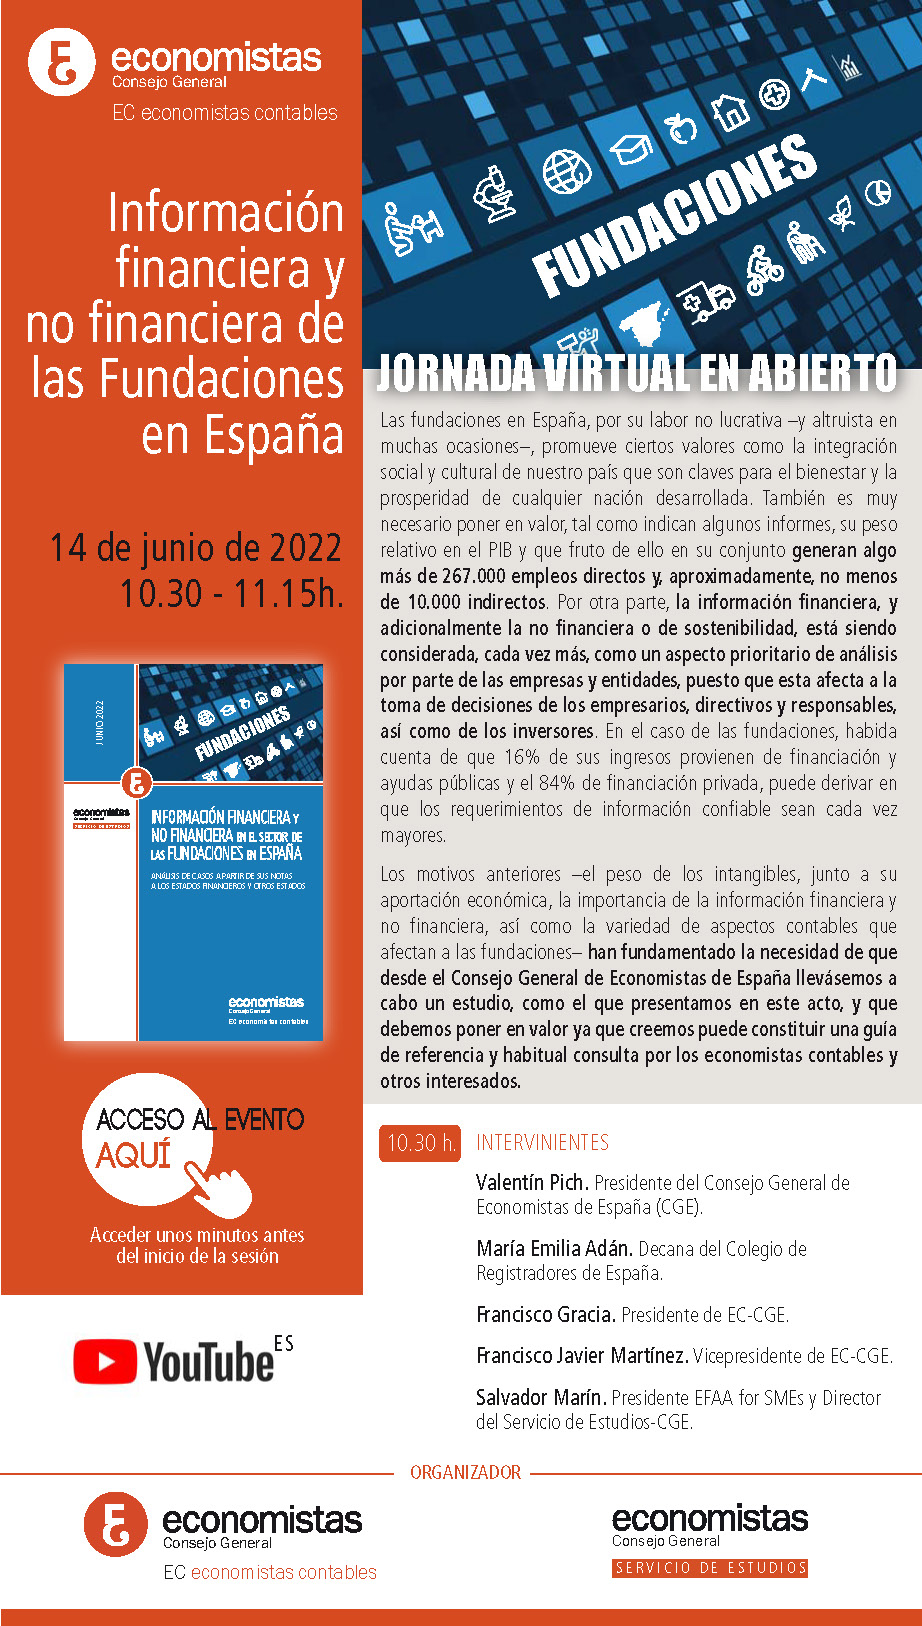 JornadaIFundaciones(0606)v2 (1)